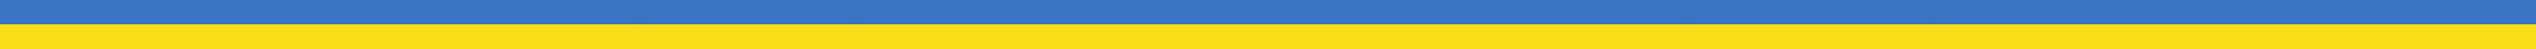 flaga ukraina p